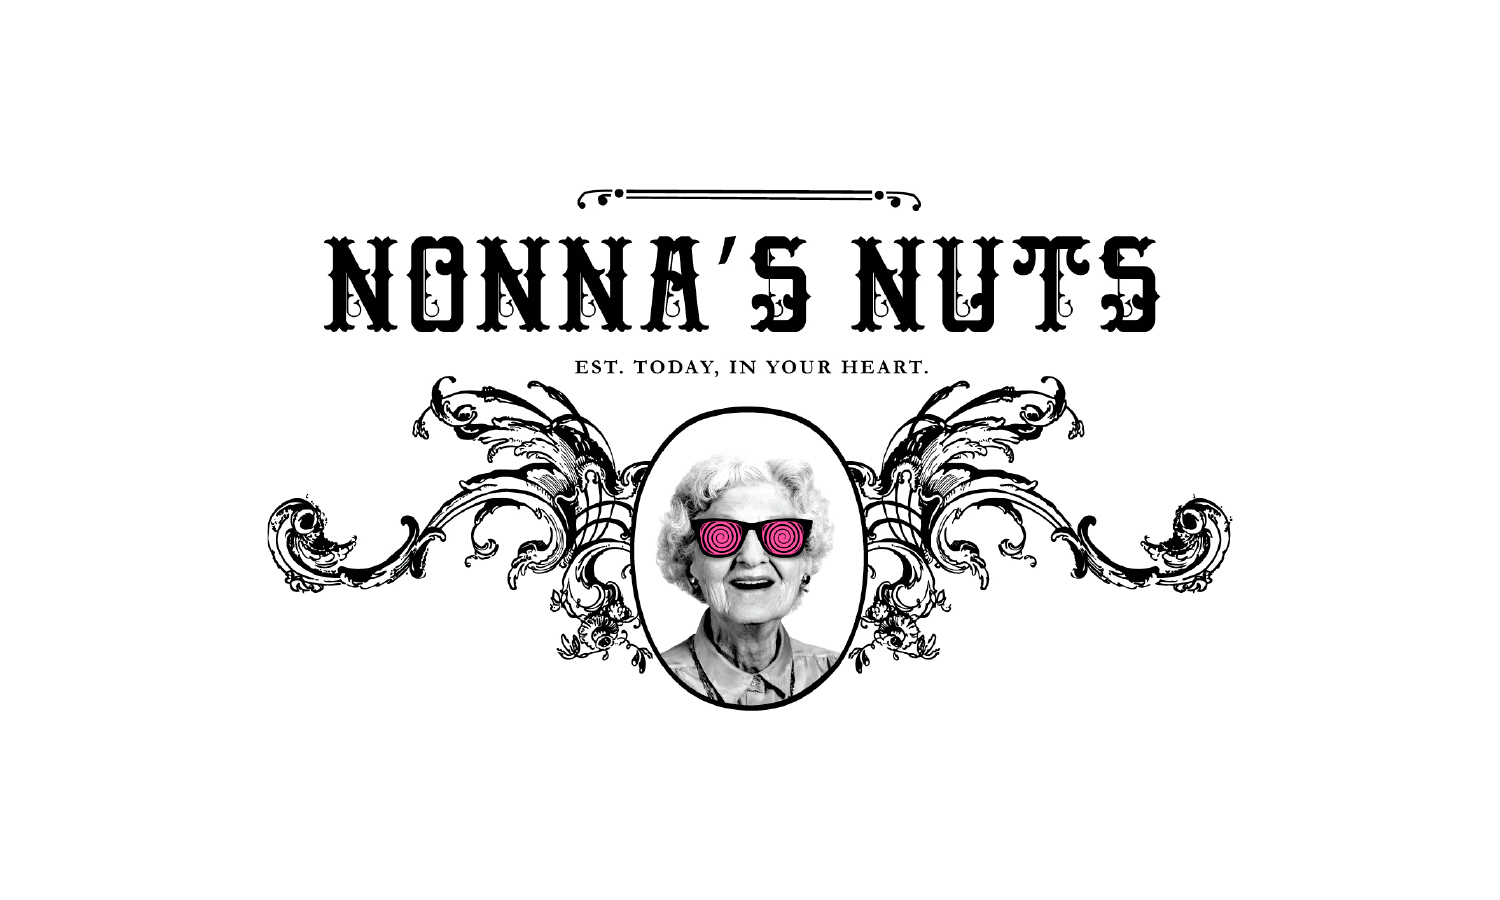 Multiple Inc, Nonna's Nuts